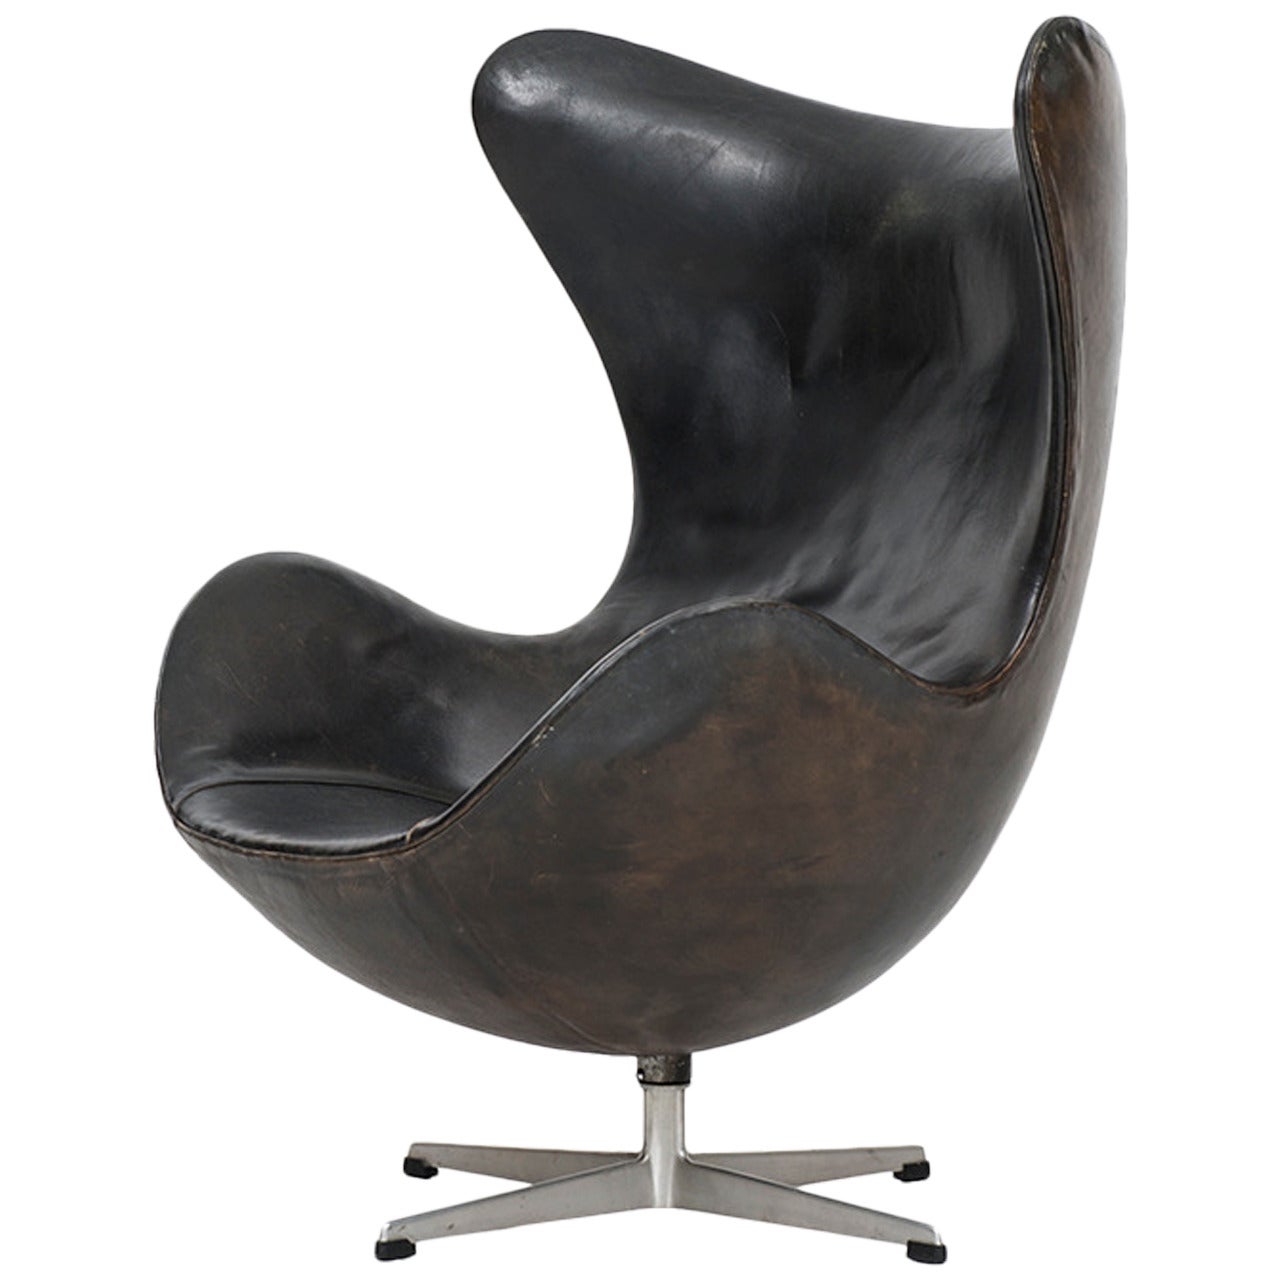 Arne Jacobsen Early Egg Chair in Original Black Leather by Fritz Hansen